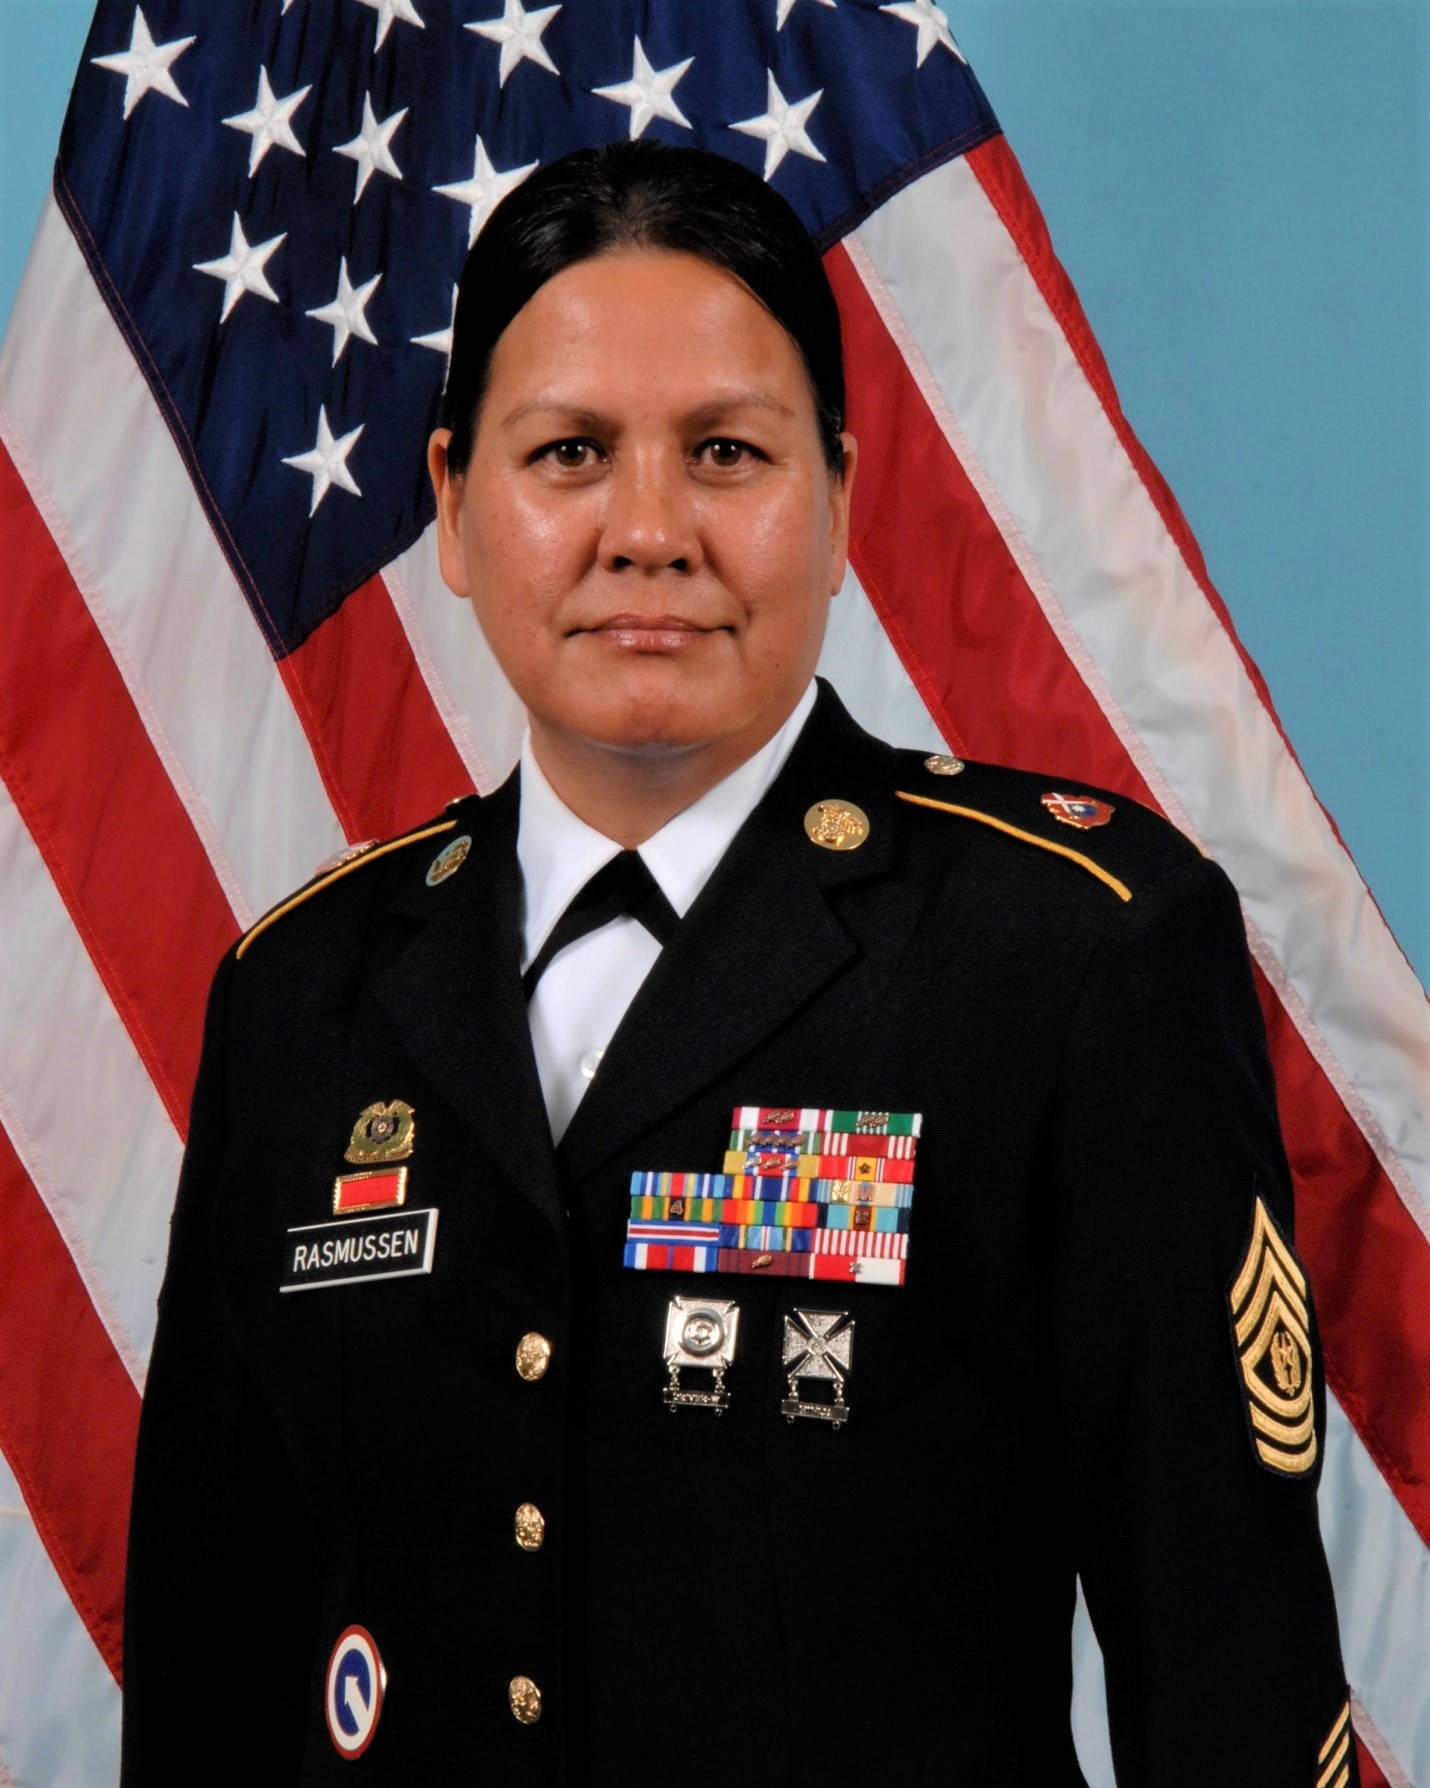 Command Sergeant Major Maria L Rasmussen Alabama National Guard 